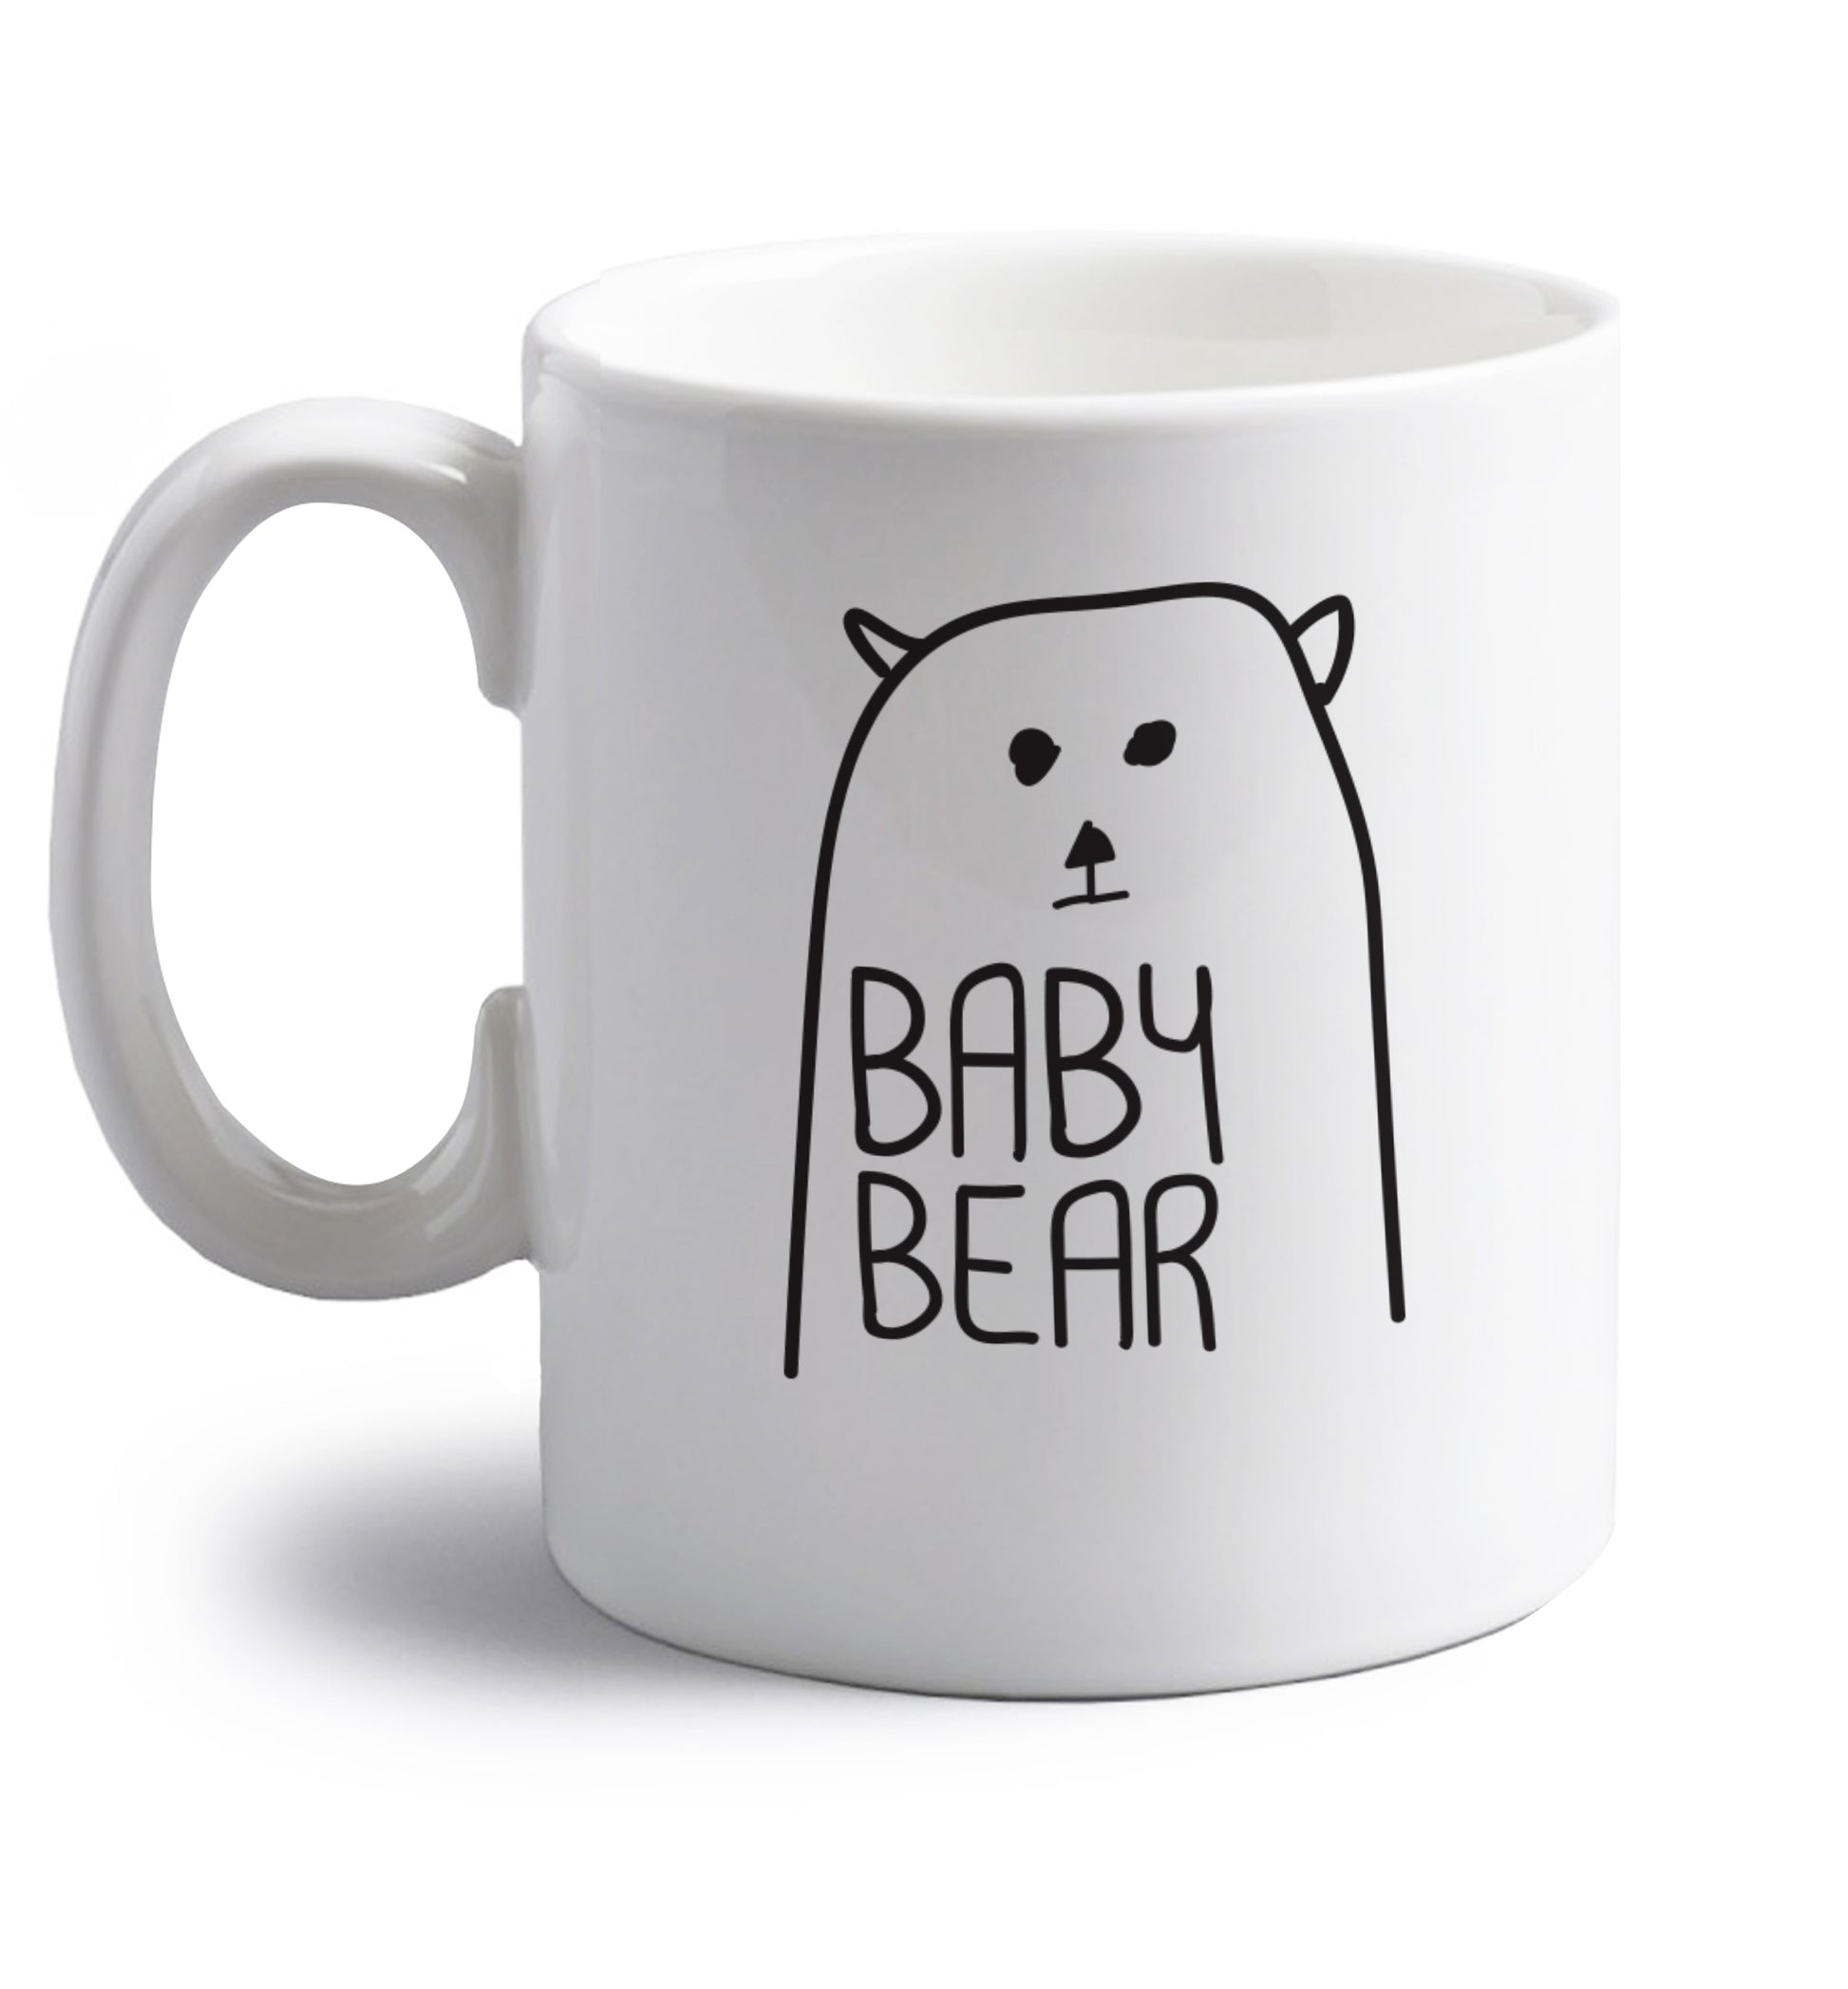 Baby bear right handed white ceramic mug 